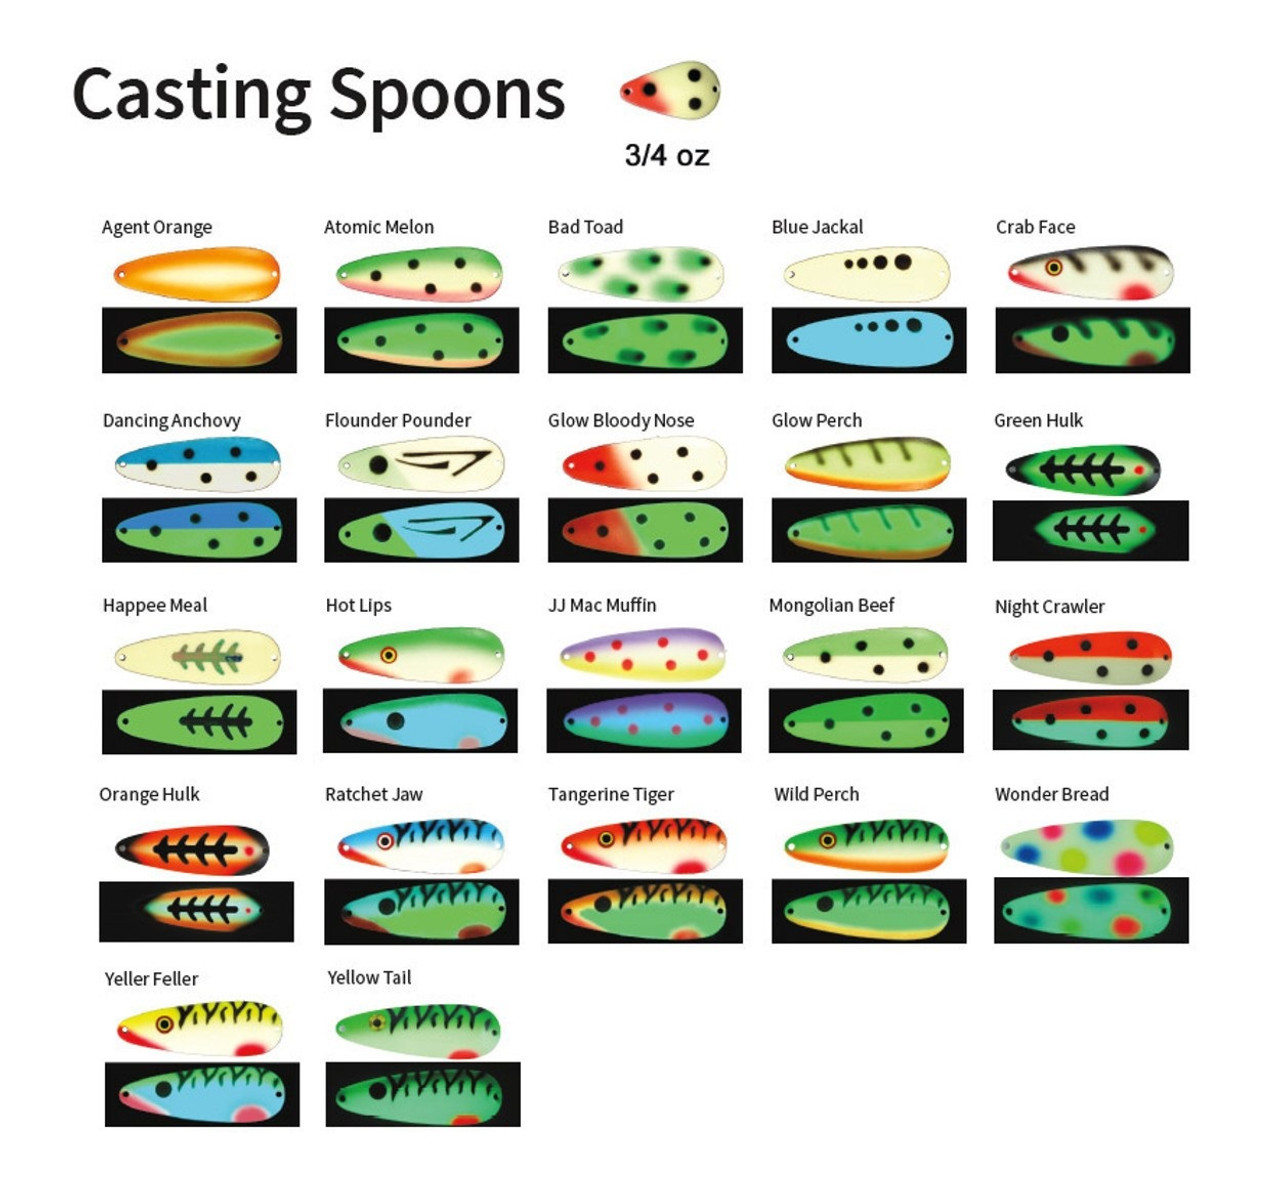 Moonshine Lures 3/4 oz. RV Casting Spoon, Agent Orange